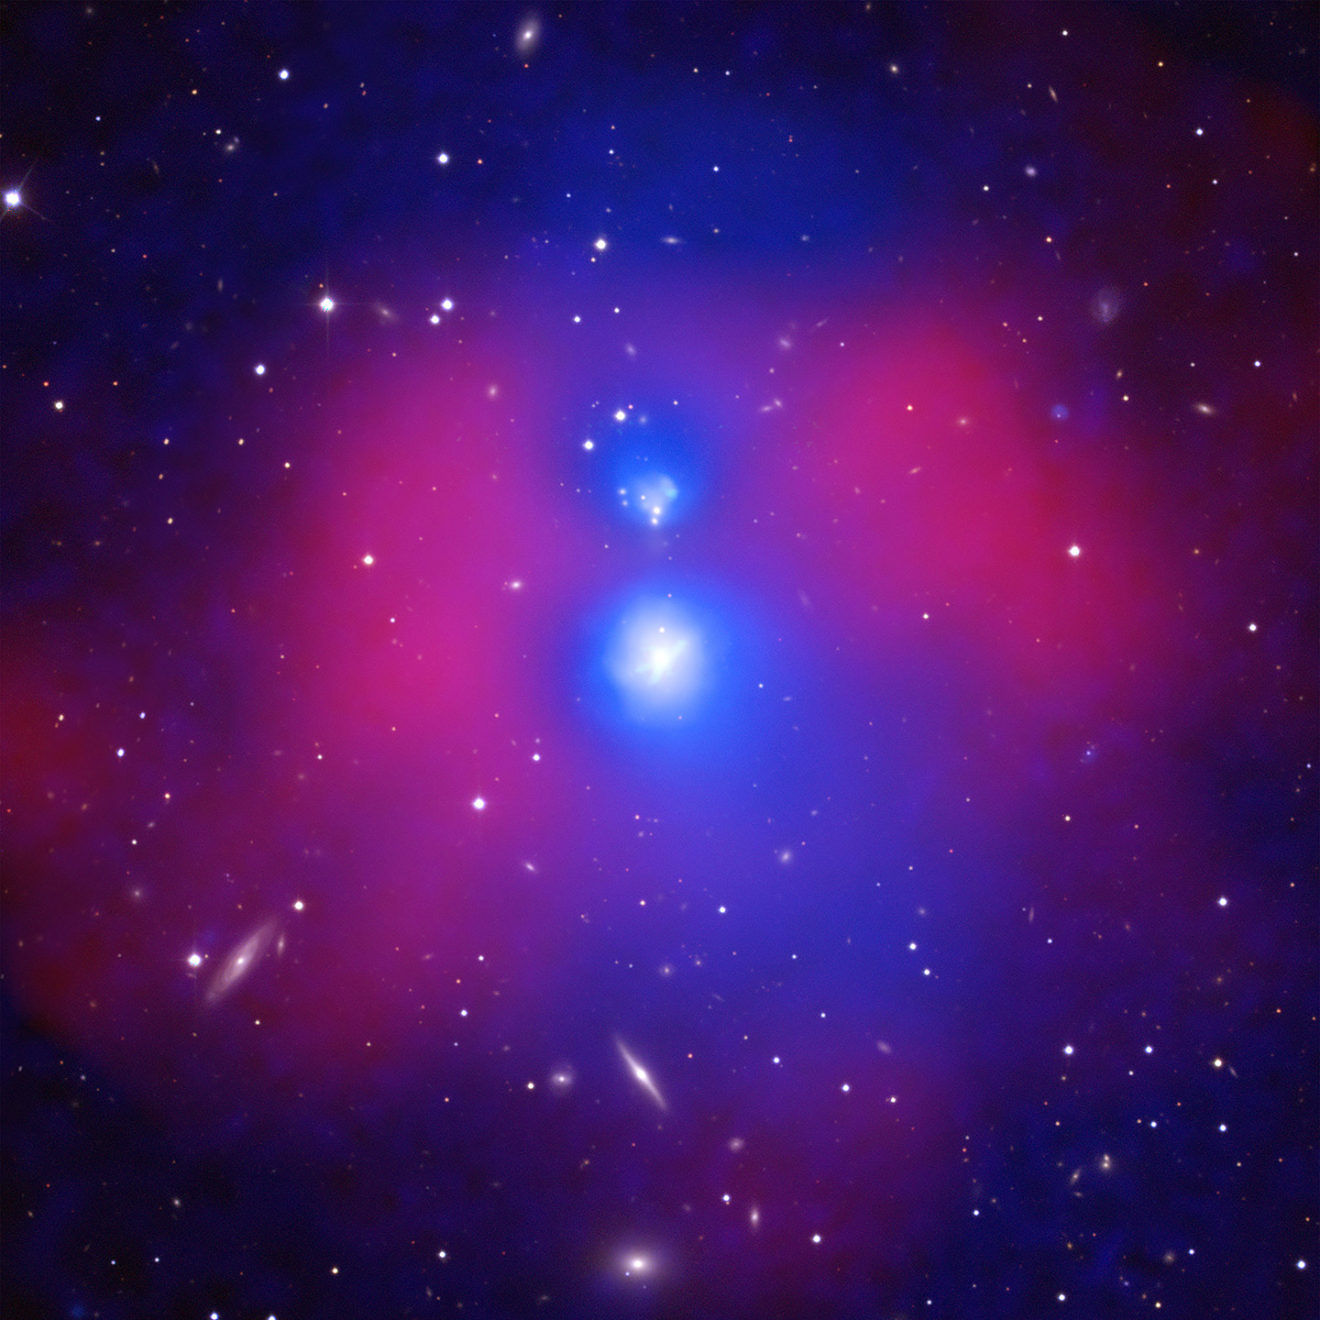 Zeer heftige botsing waargenomen tussen twee groepen sterrenstelsels